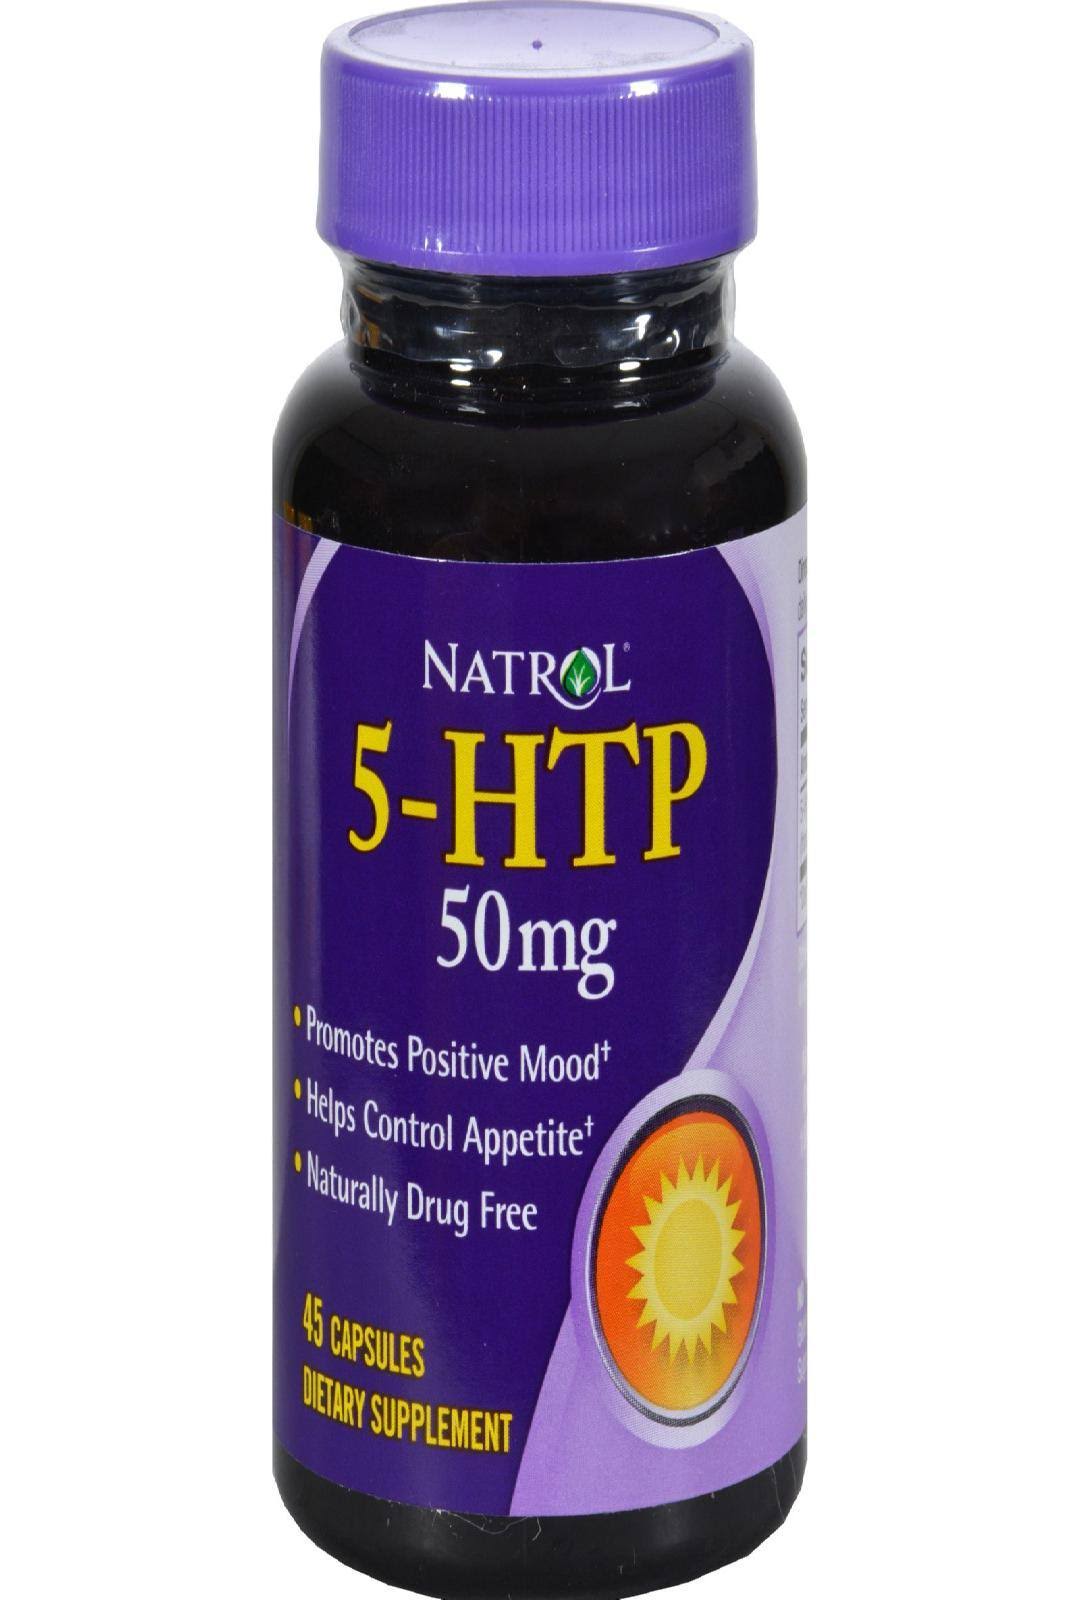 Natrol 5-HTP Dietary Supplement Capsules - 50mg, 45ct